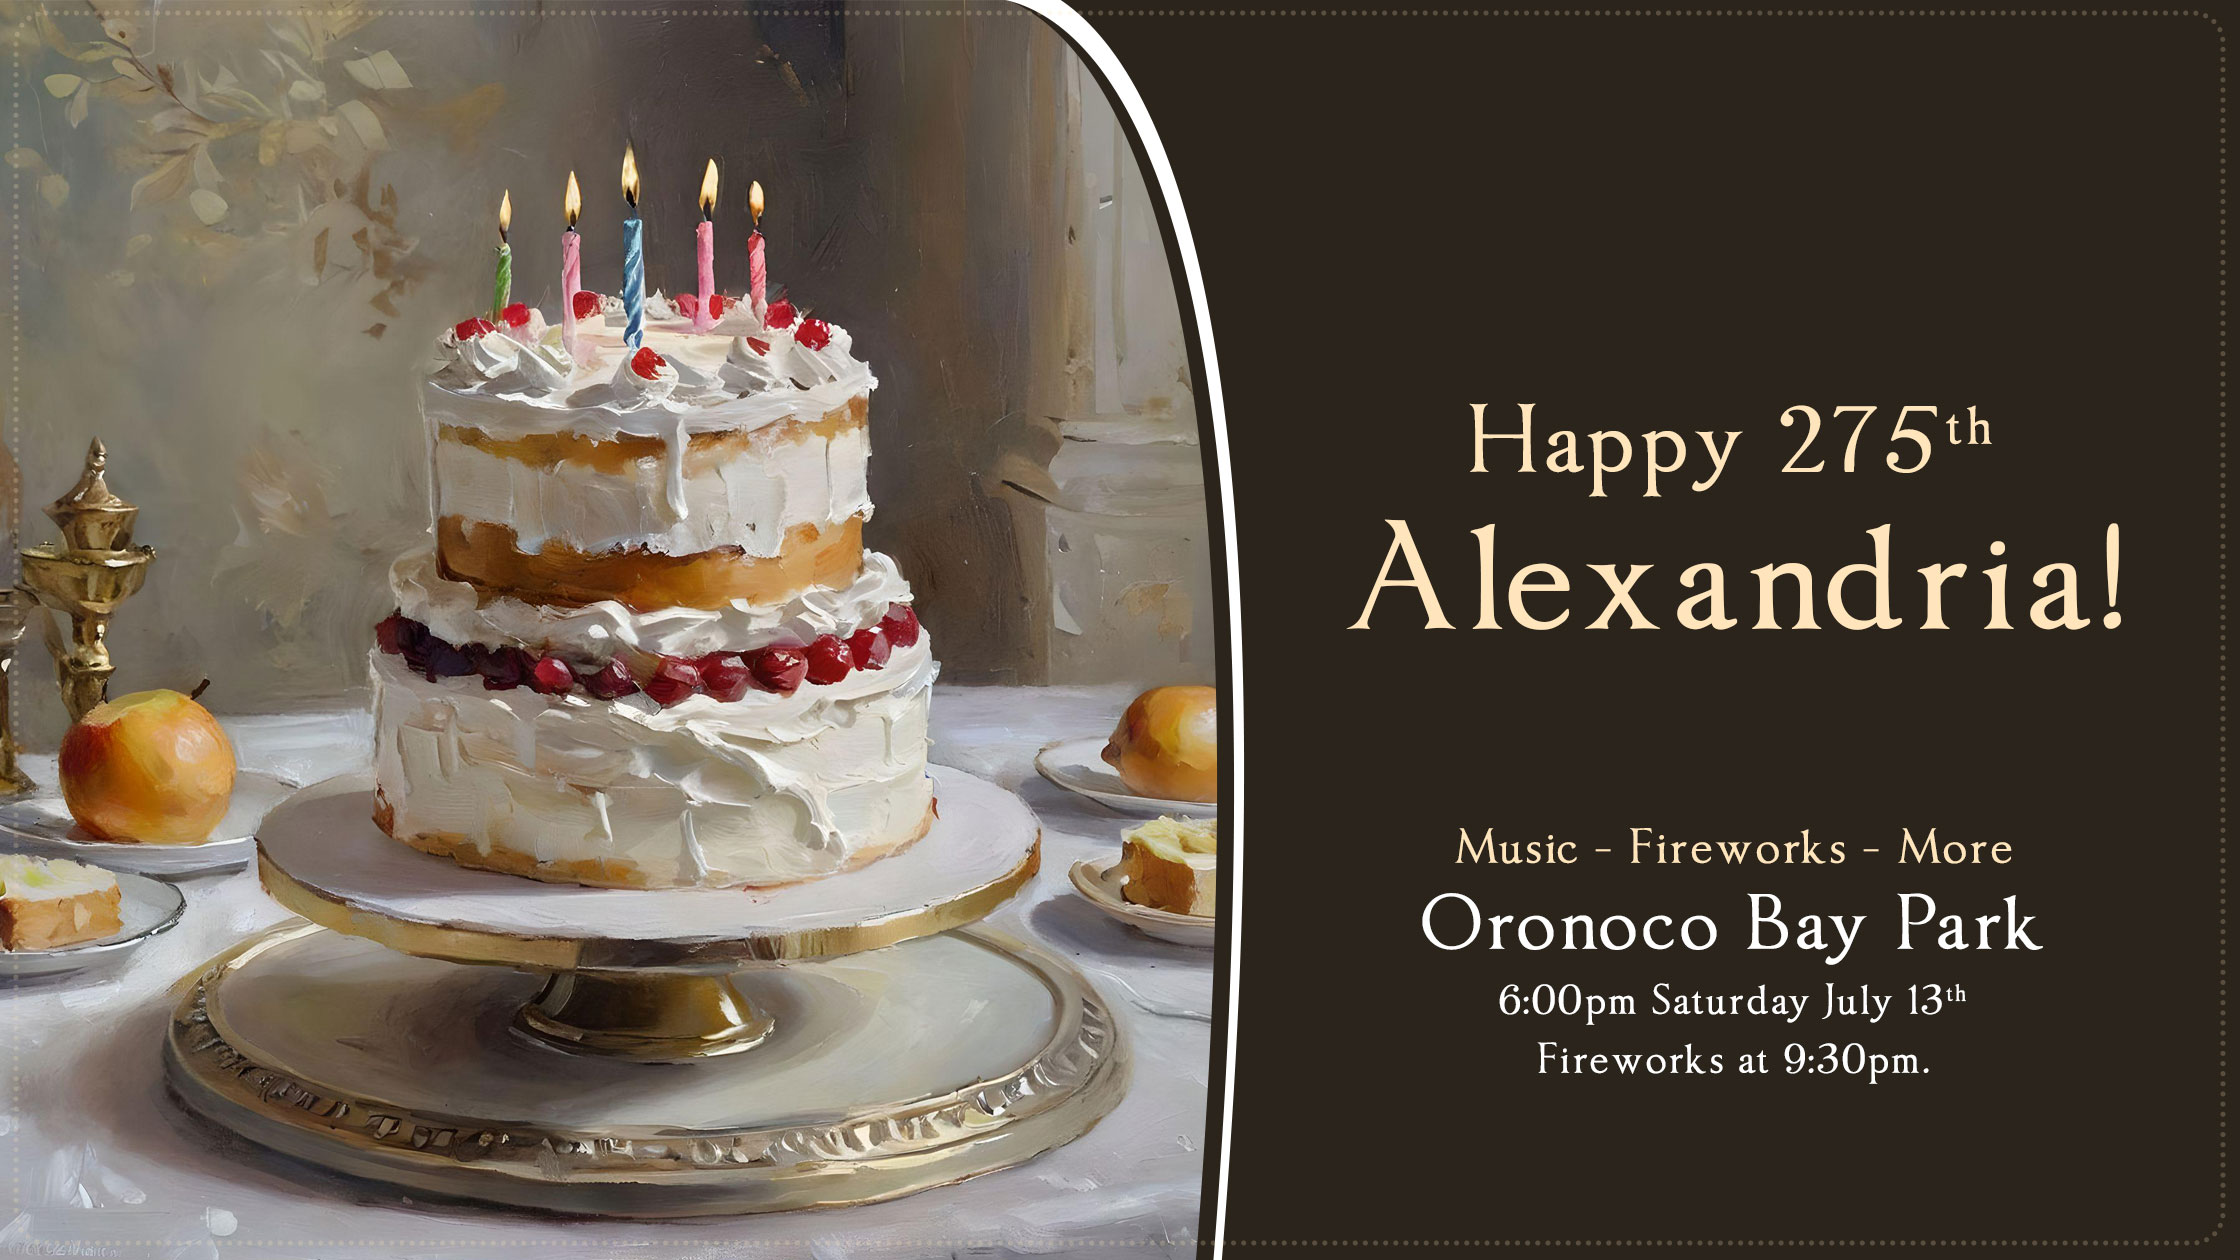 Alexandria's 275th Birthday